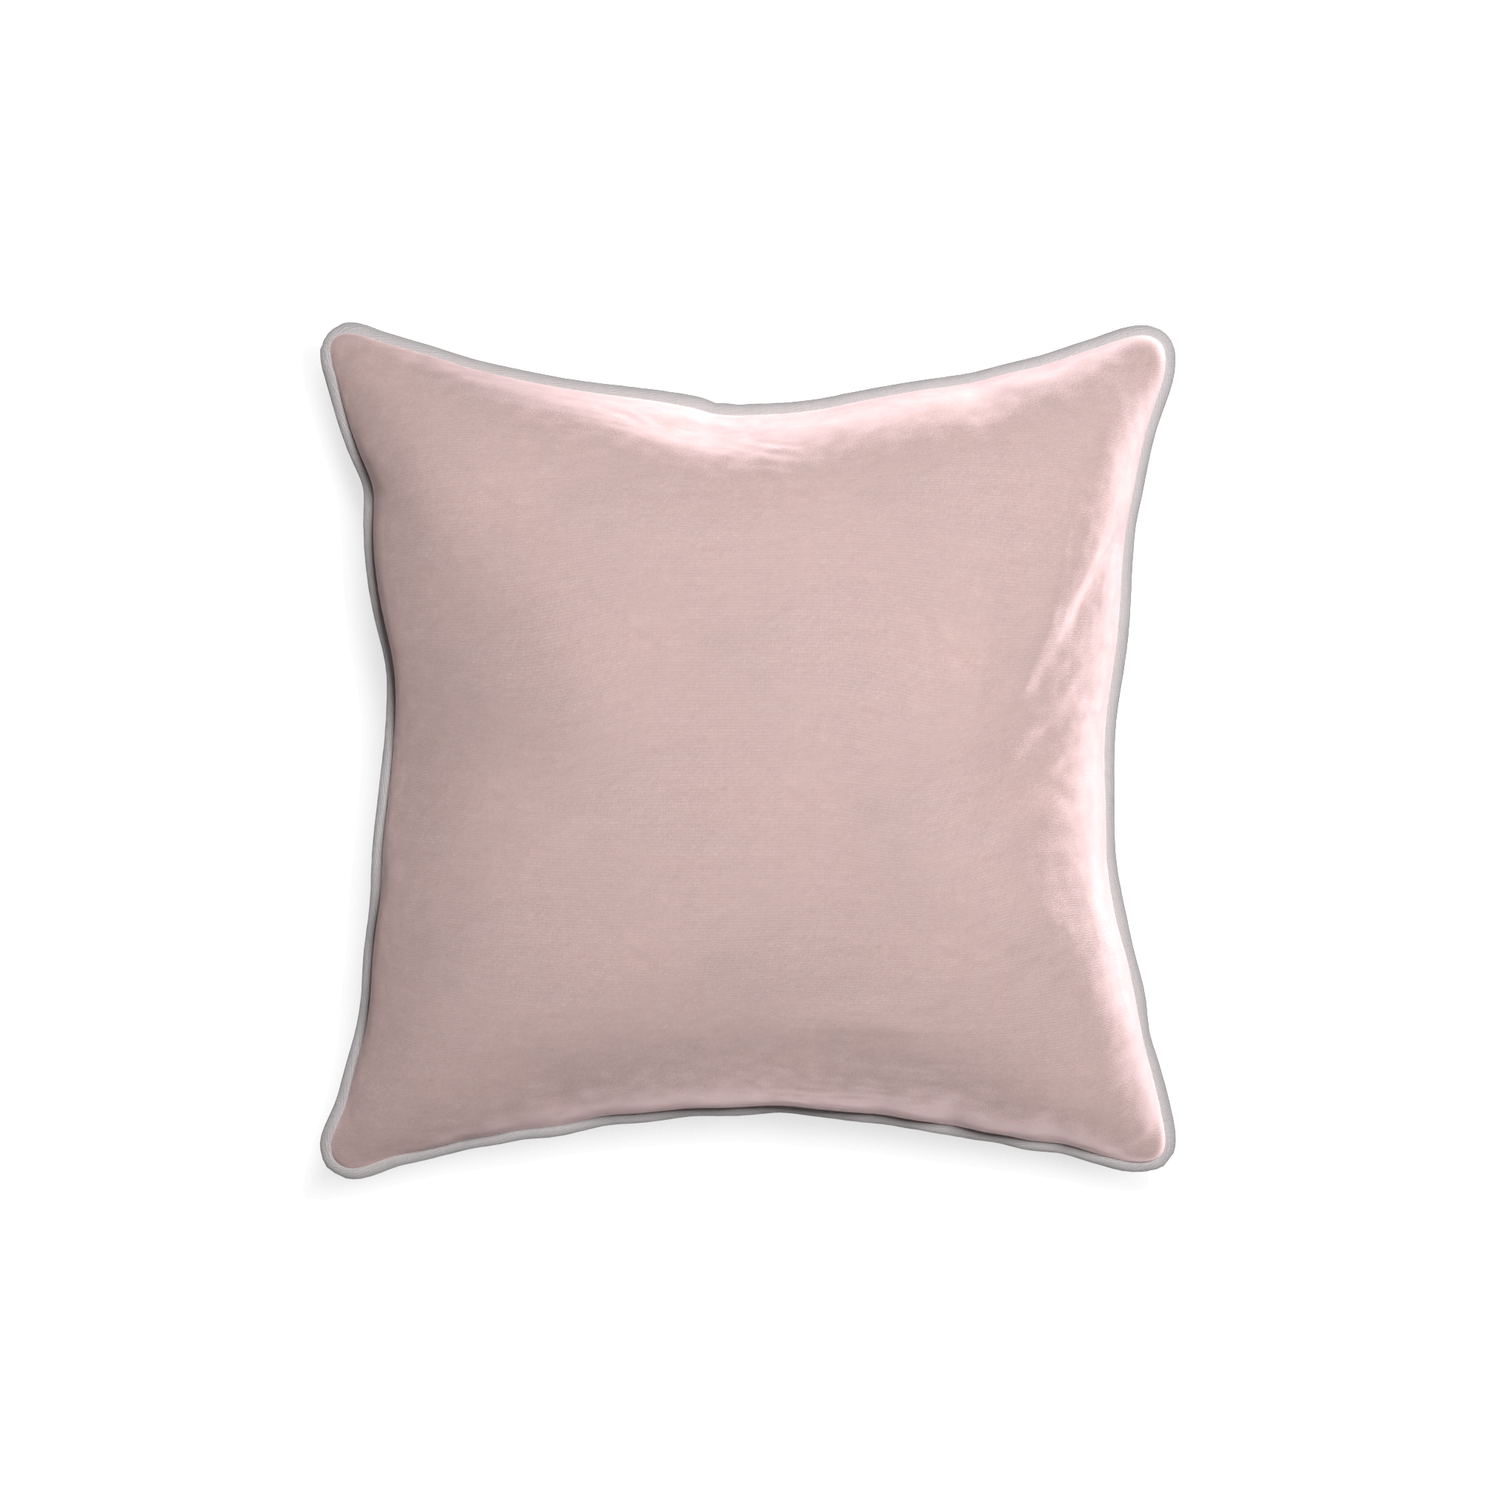 18-square rose velvet custom pillow with pebble piping on white background